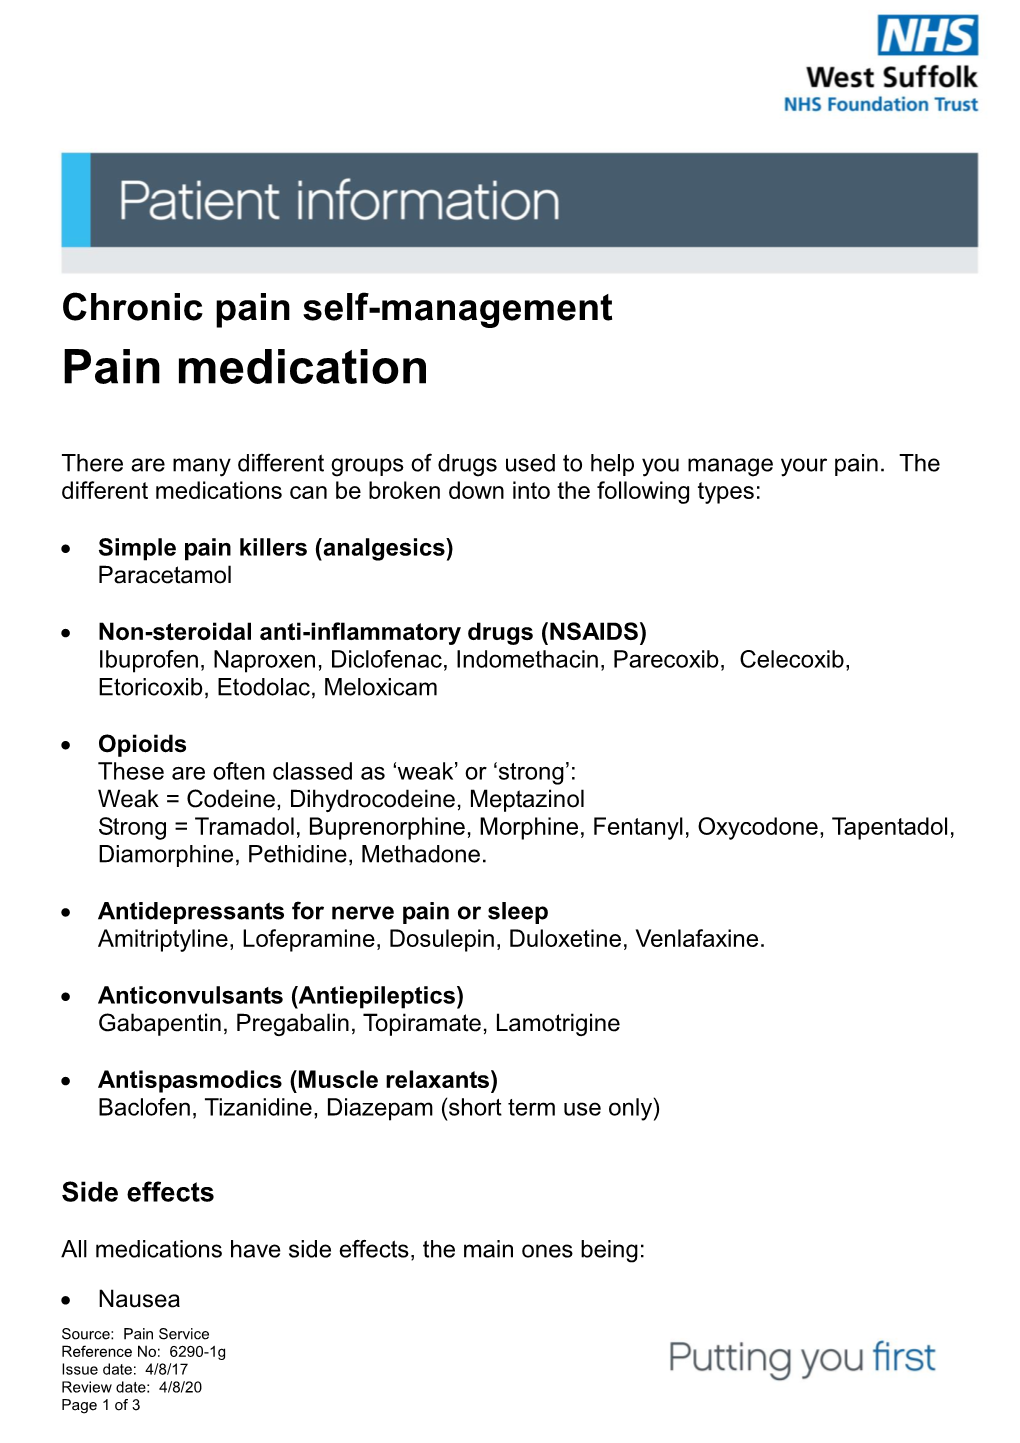 Chronic Pain Self-Management: Pain Medication